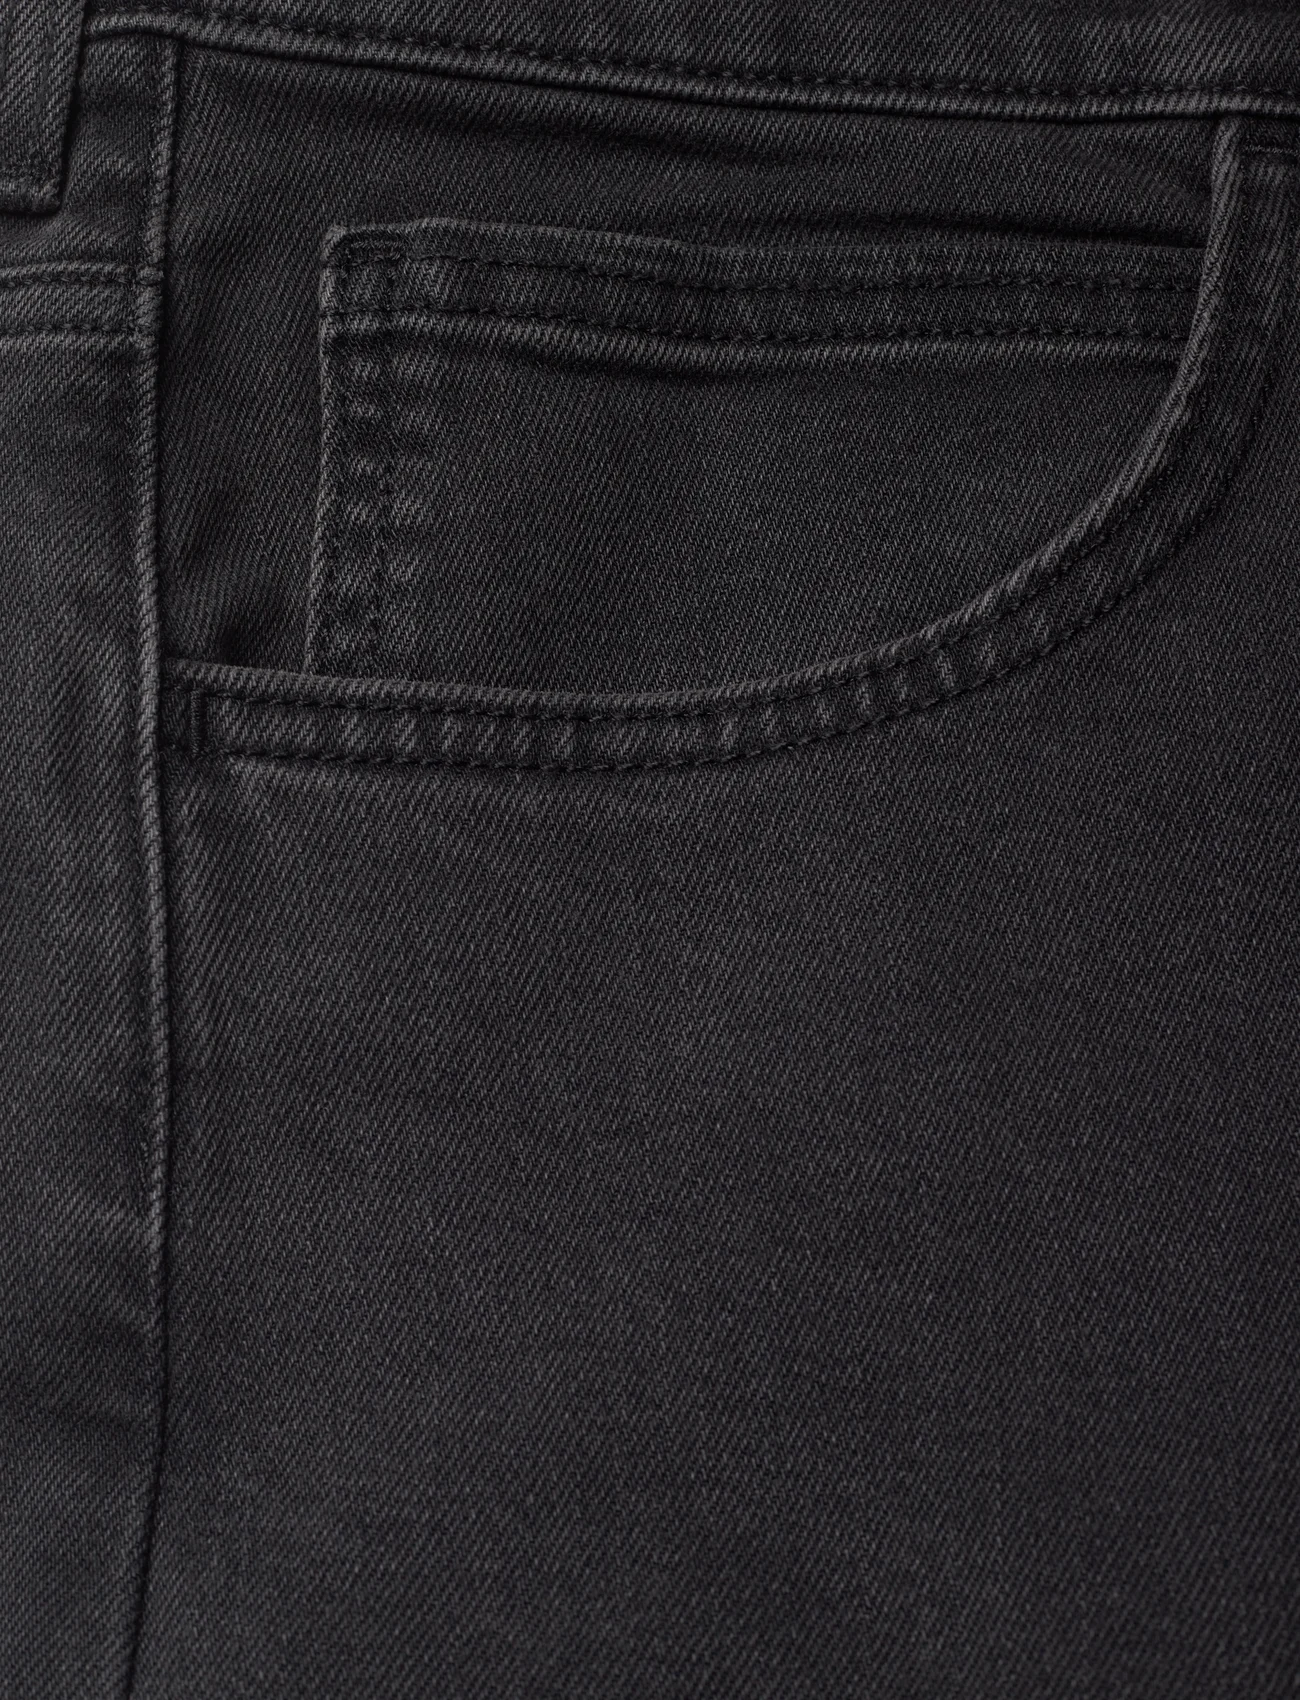 Lee Jeans - BROOKLYN - regular jeans - used hellen - 1